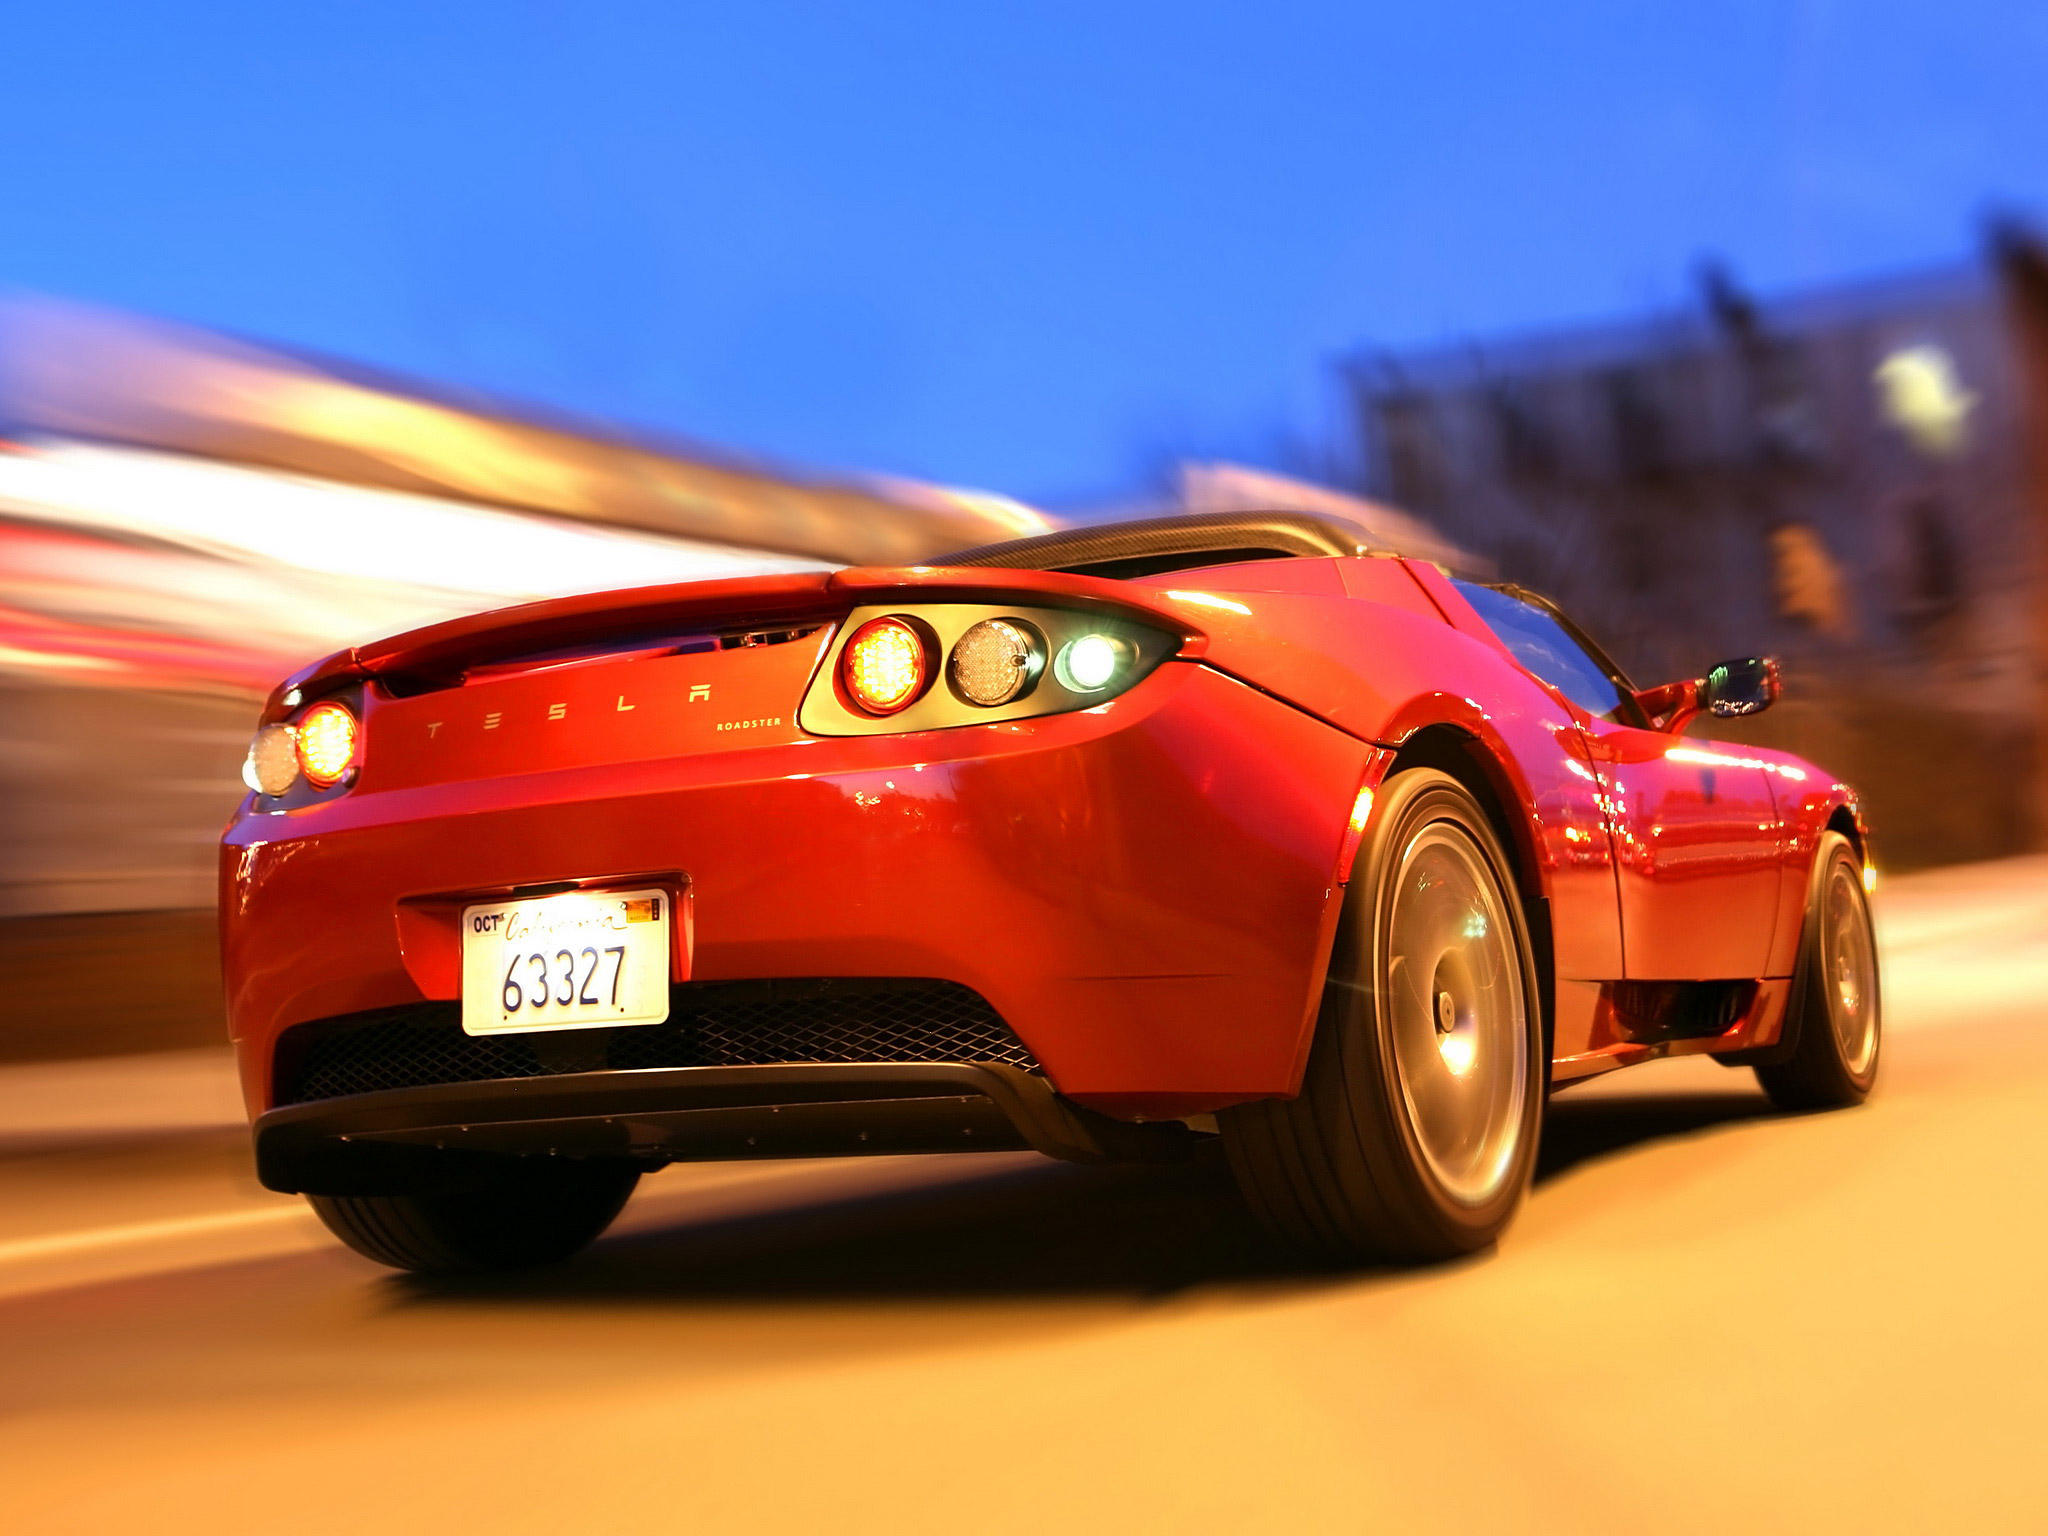  2008 Tesla Roadster Wallpaper.